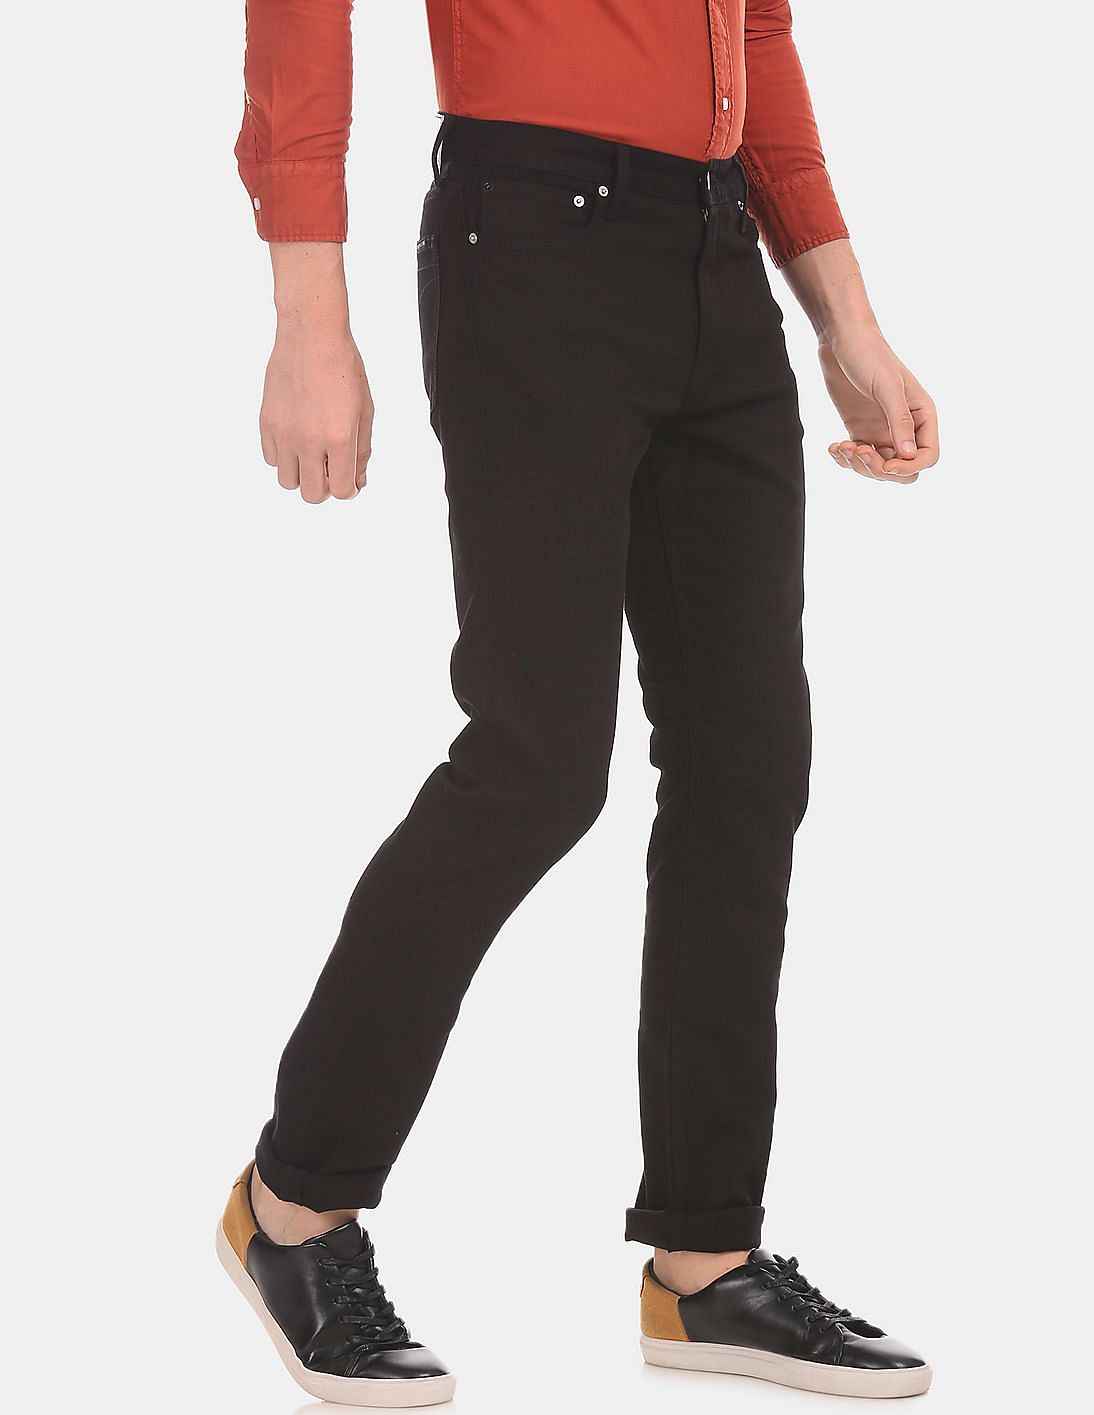 black slim stretch jeans mens